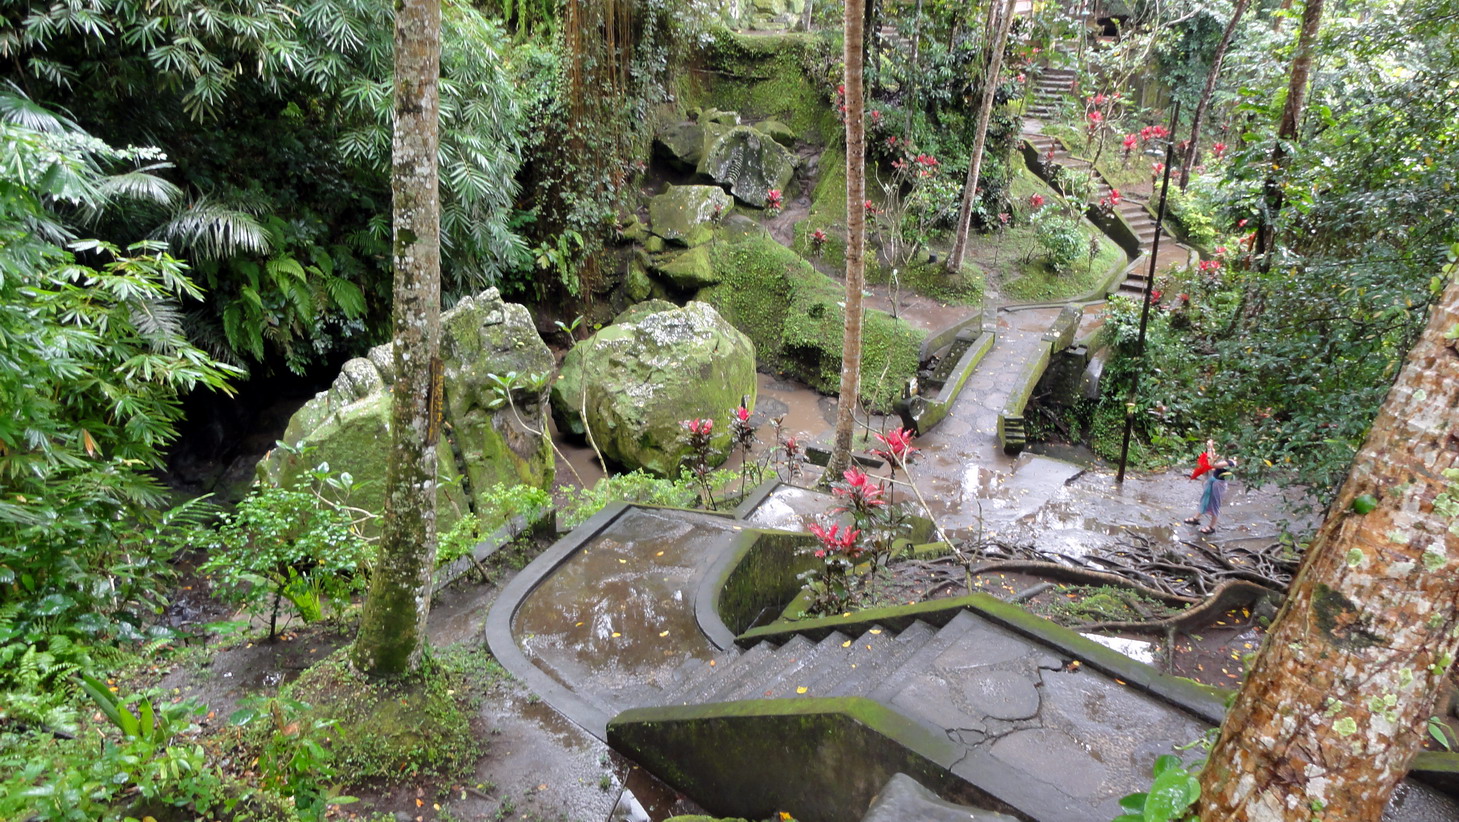 Foto: Jardines de Goa Gajah (Caverna del elefante) - Blahbatu (Bali), Indonesia